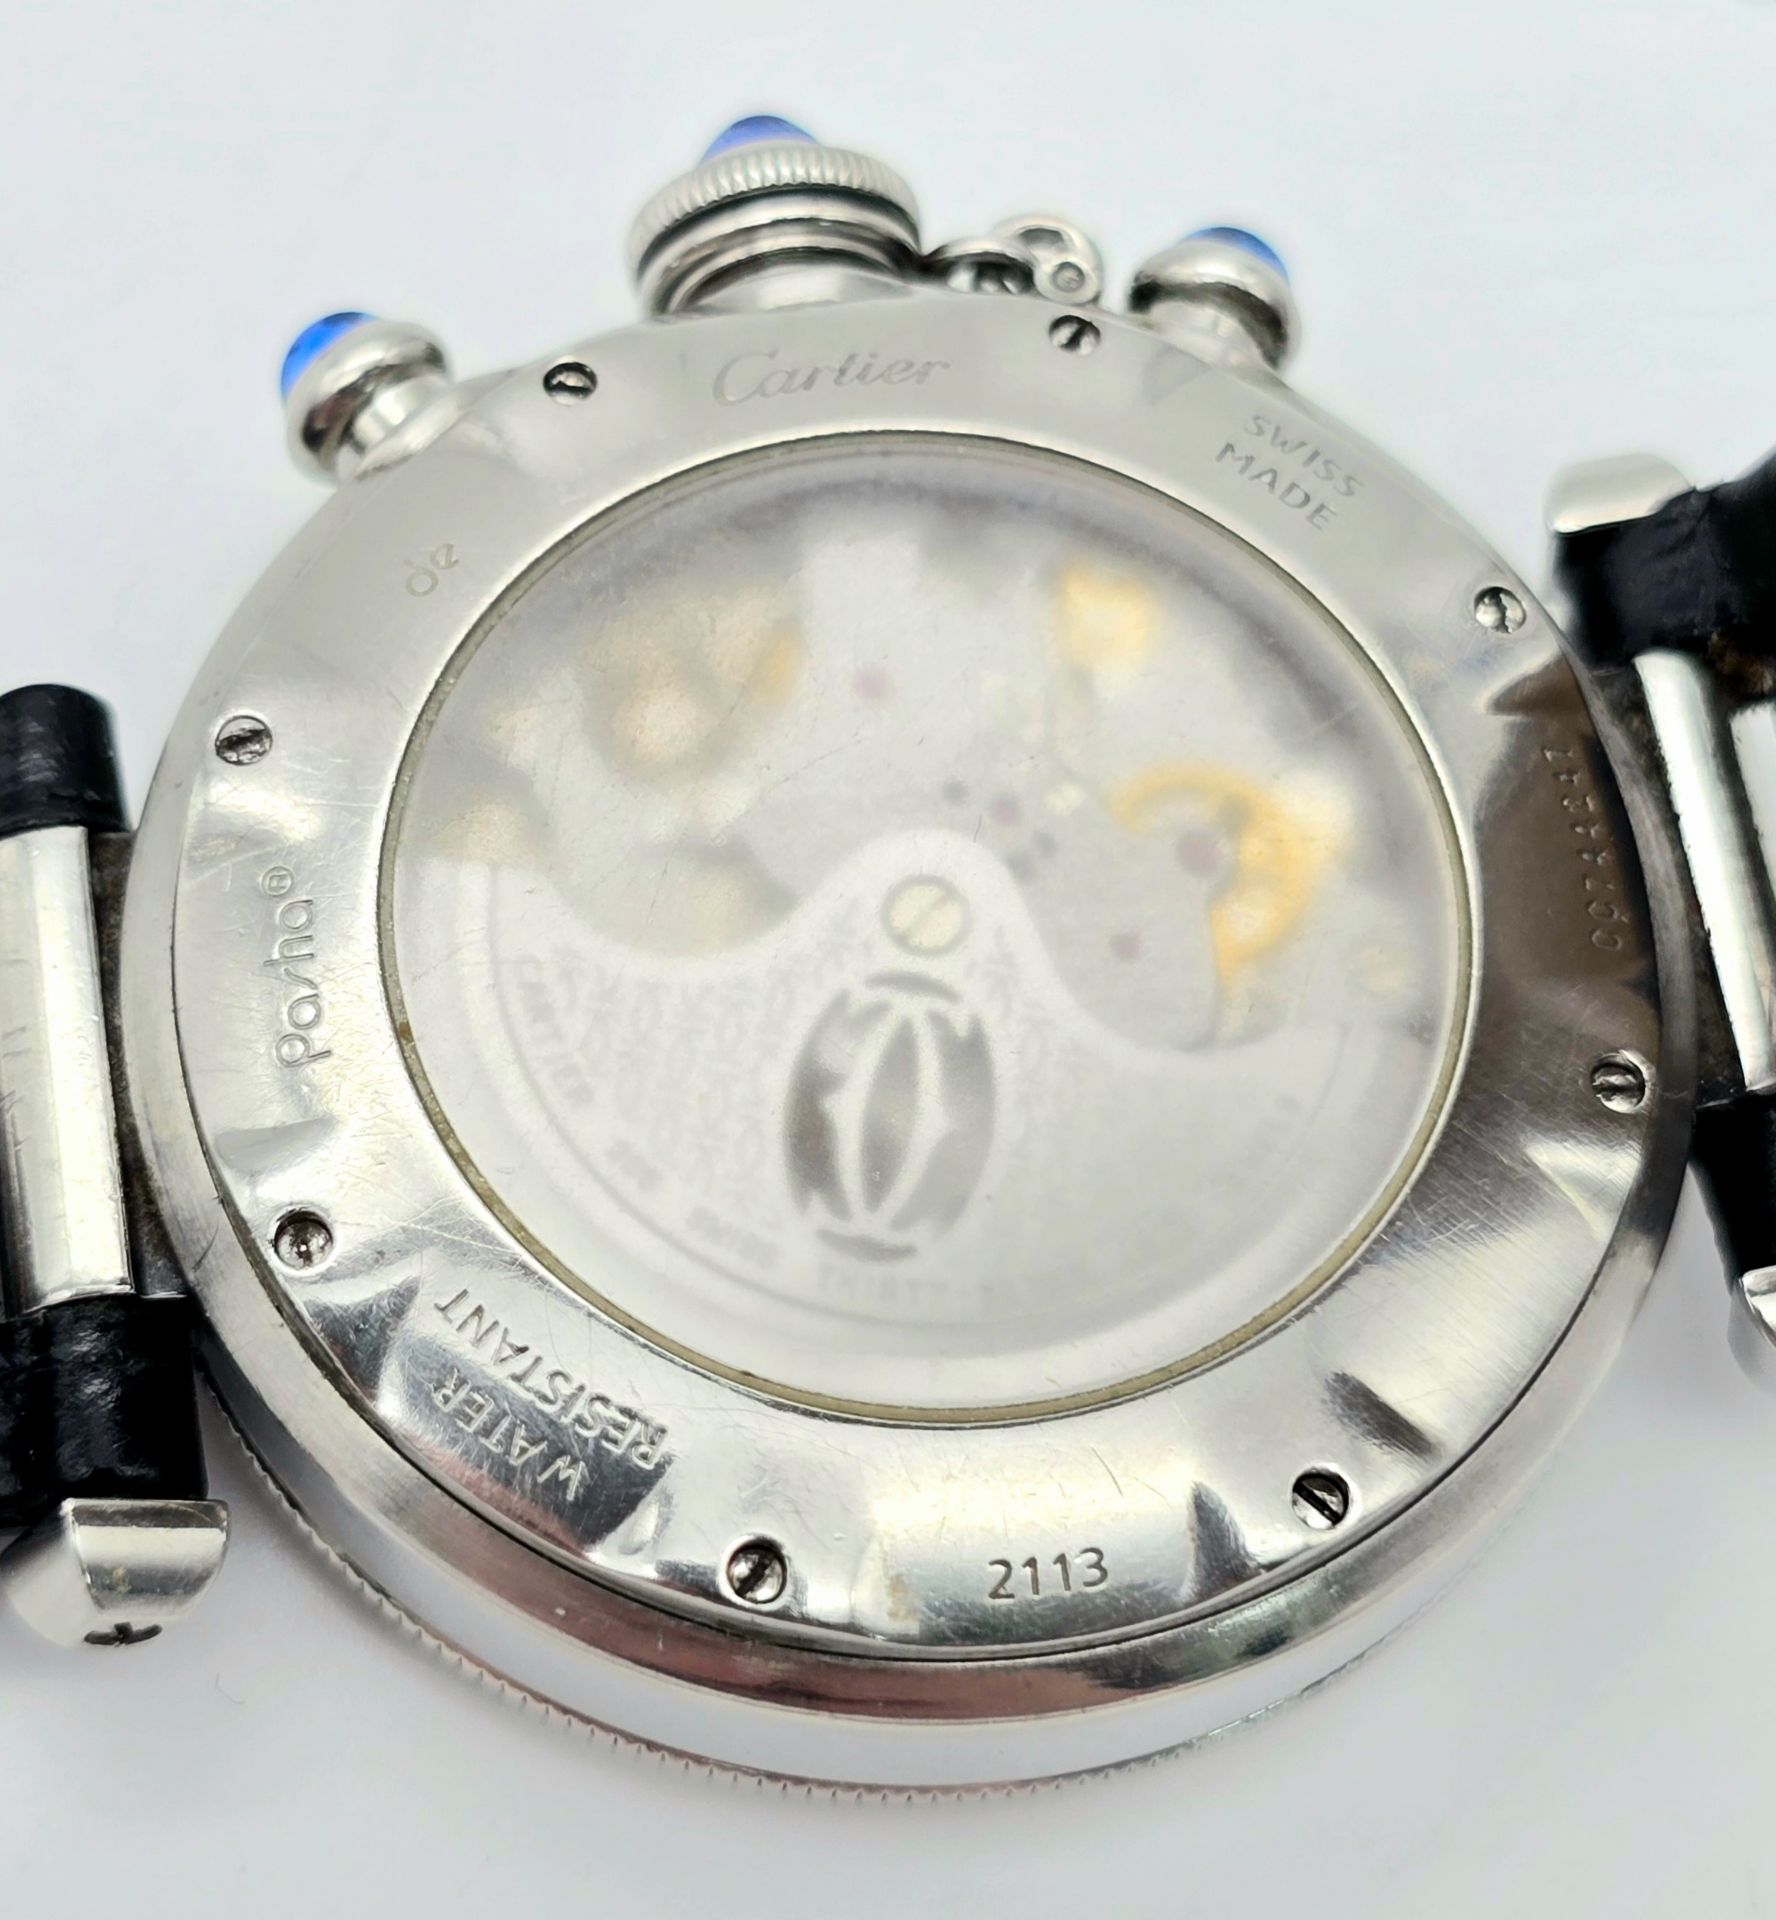 An Automatic Cartier Pasha 2113 Chronograph Gents Watch. Black leather Cartier strap. Stainless - Bild 7 aus 9